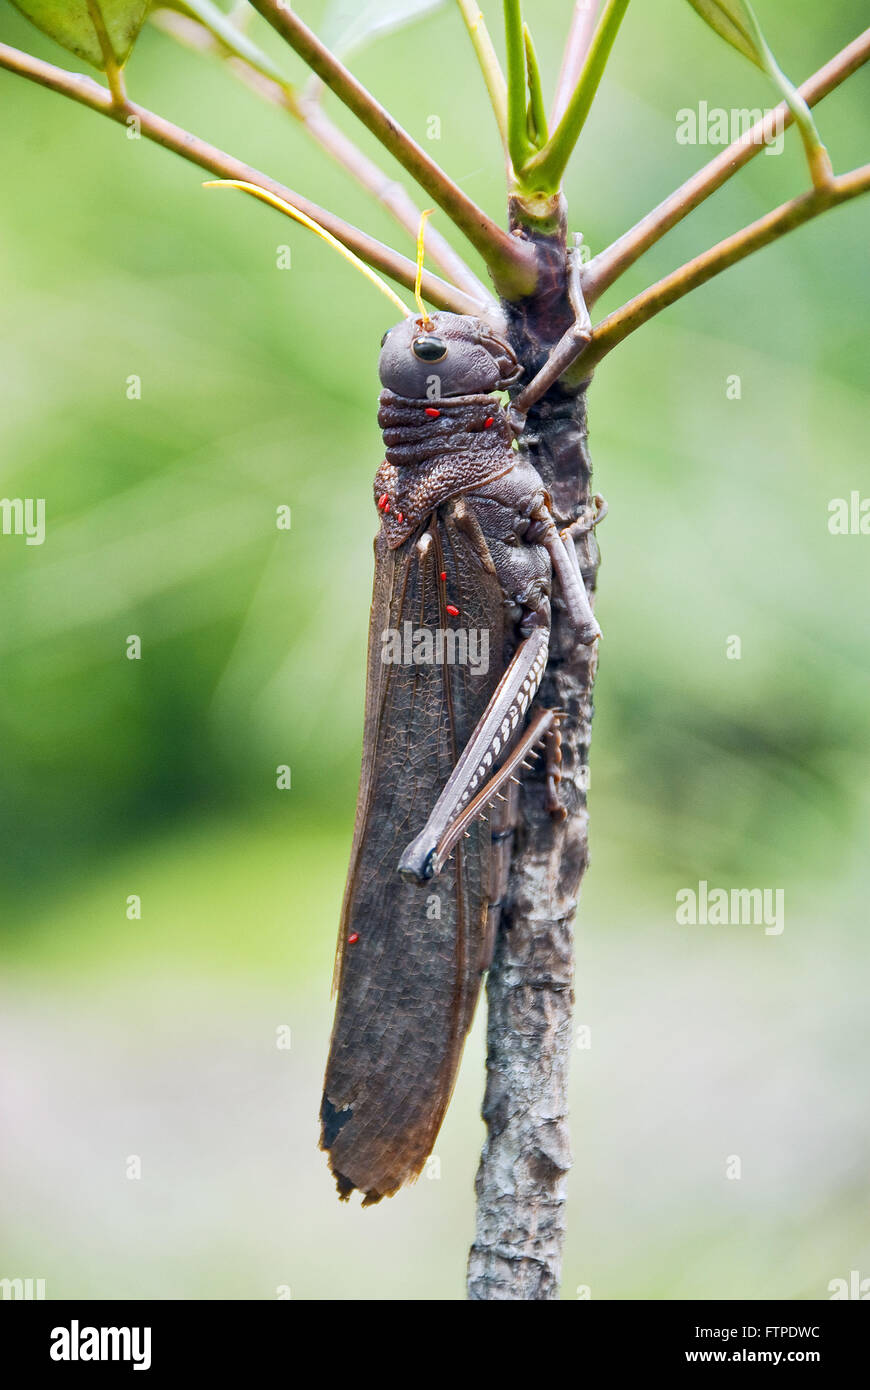 Grasshopper in the cerrado vegetation Stock Photo